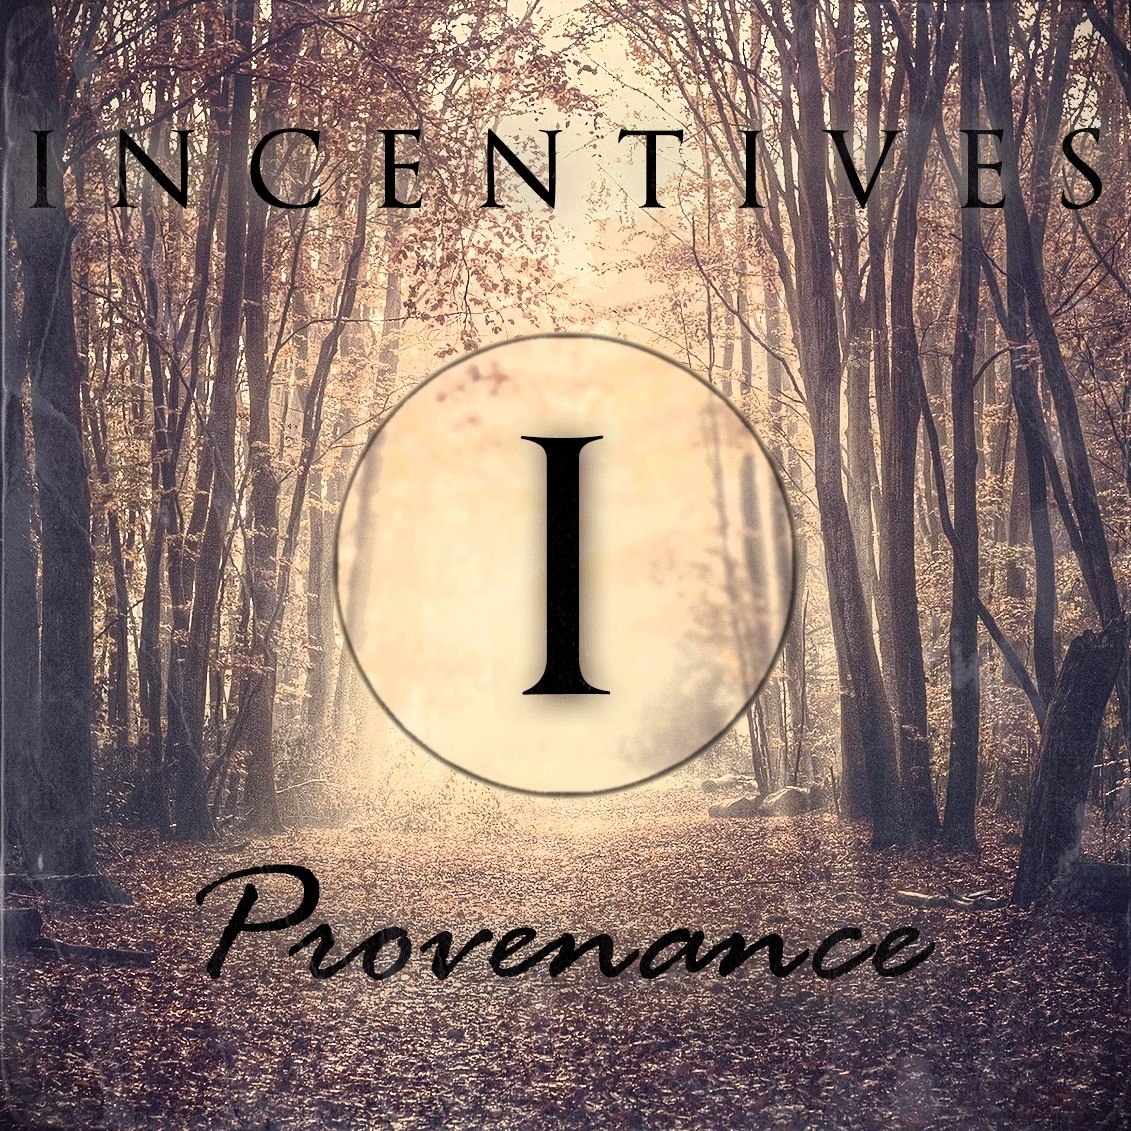 Incentives - Provenance [2-Track EP] (2013)